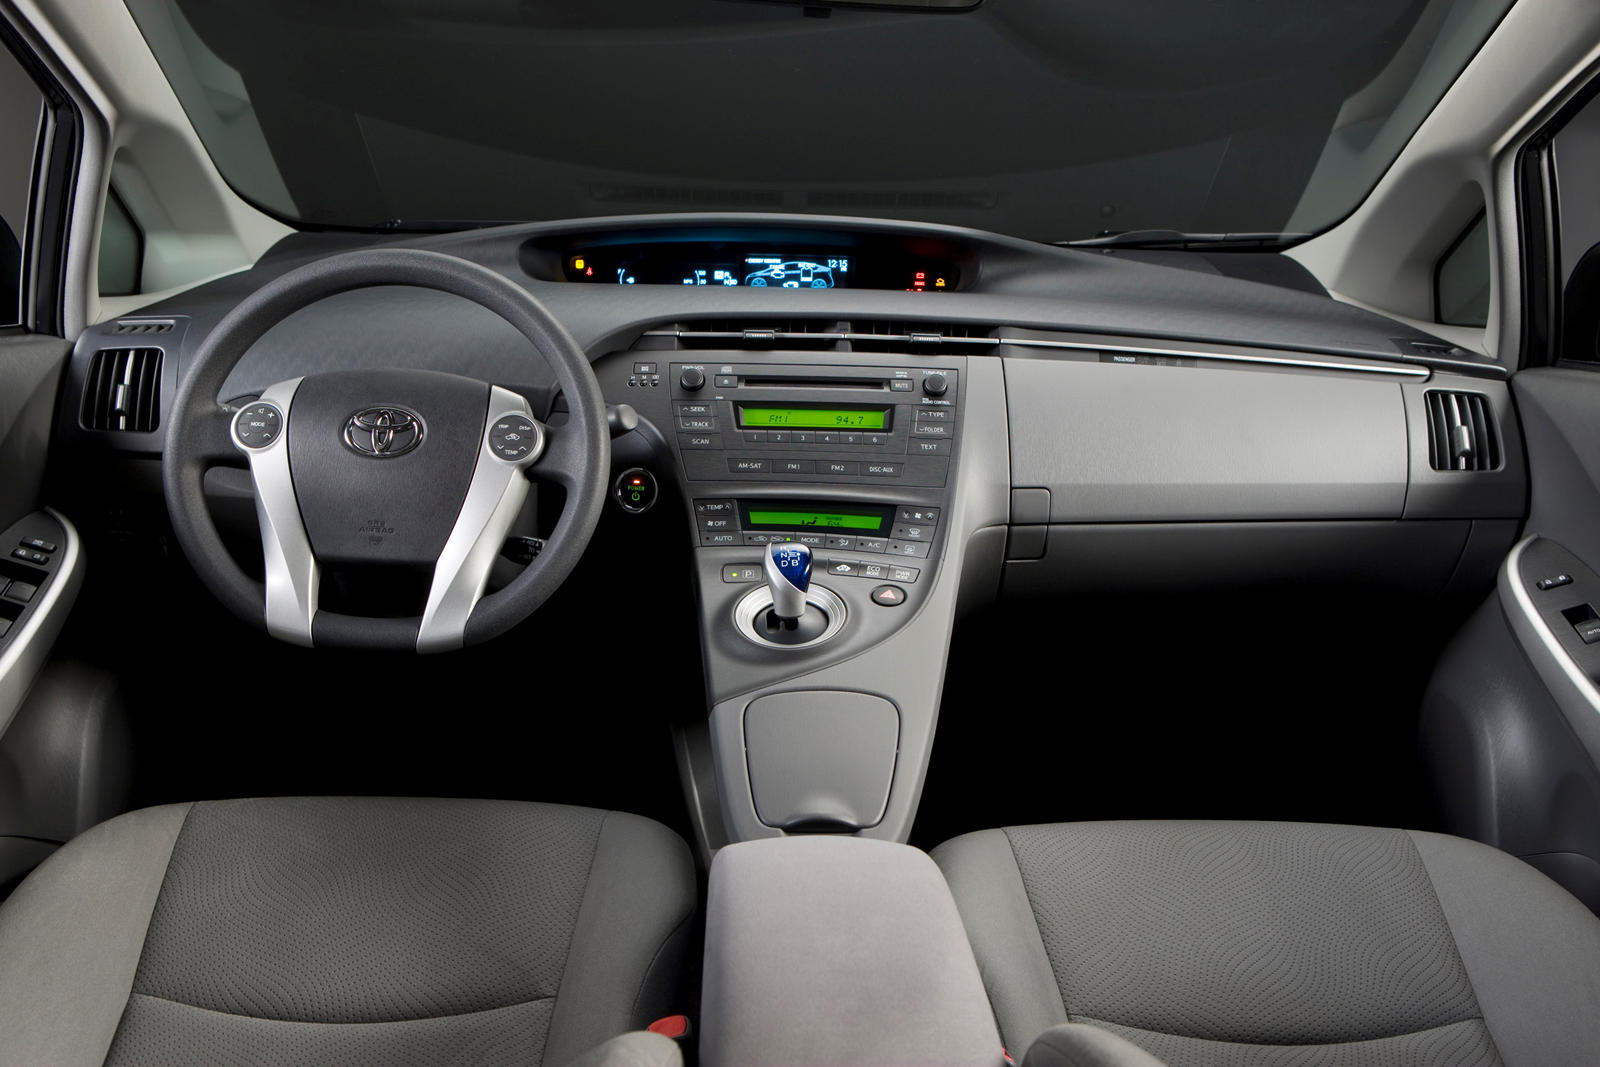 2010 Toyota Prius Interior Photos | CarBuzz